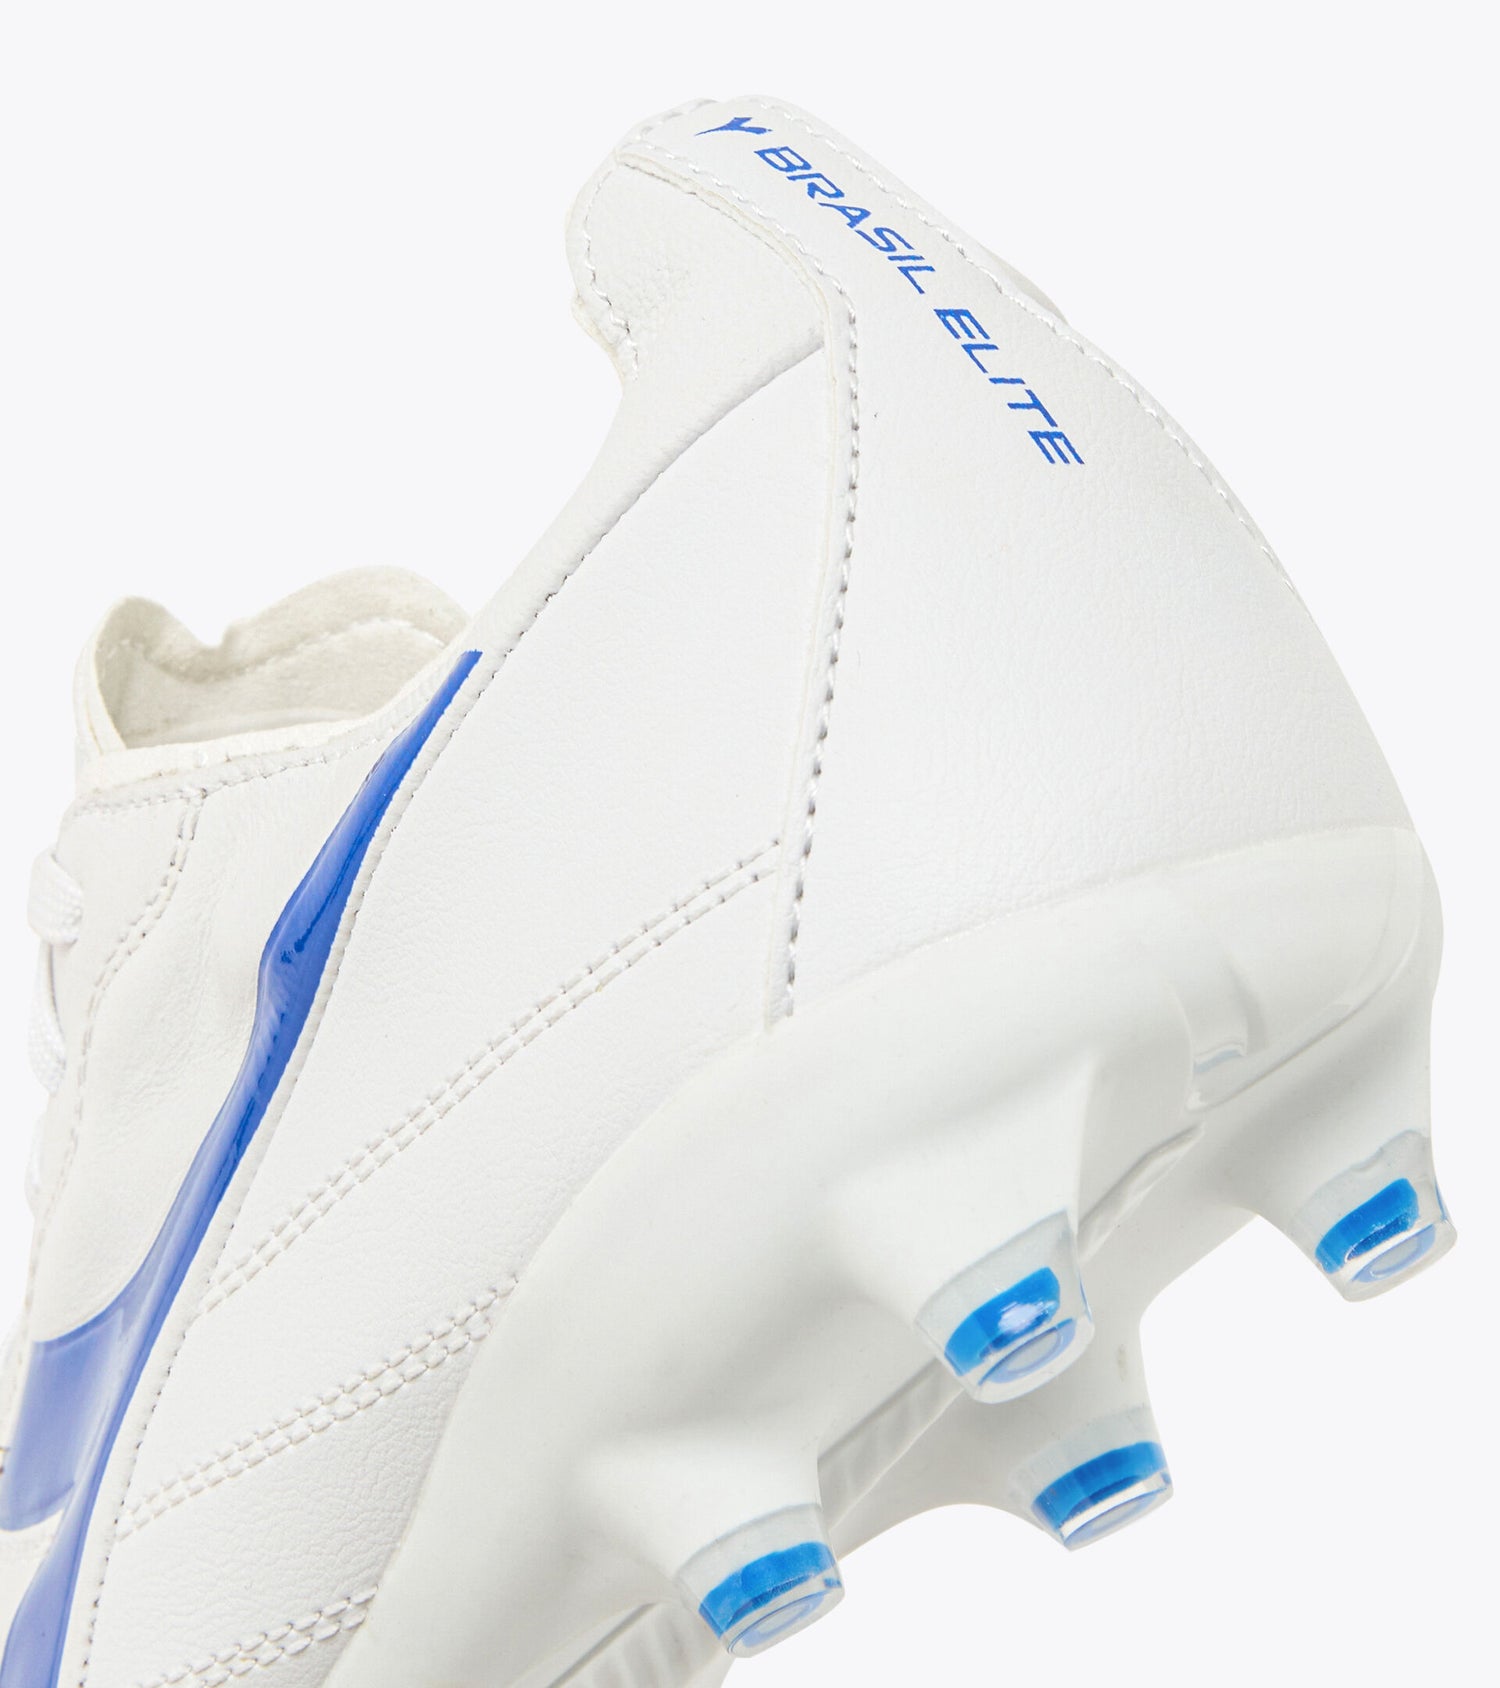 Diadora Brasil Elite 2 LT LP 12 Soccer Boots - White/Royal Blue